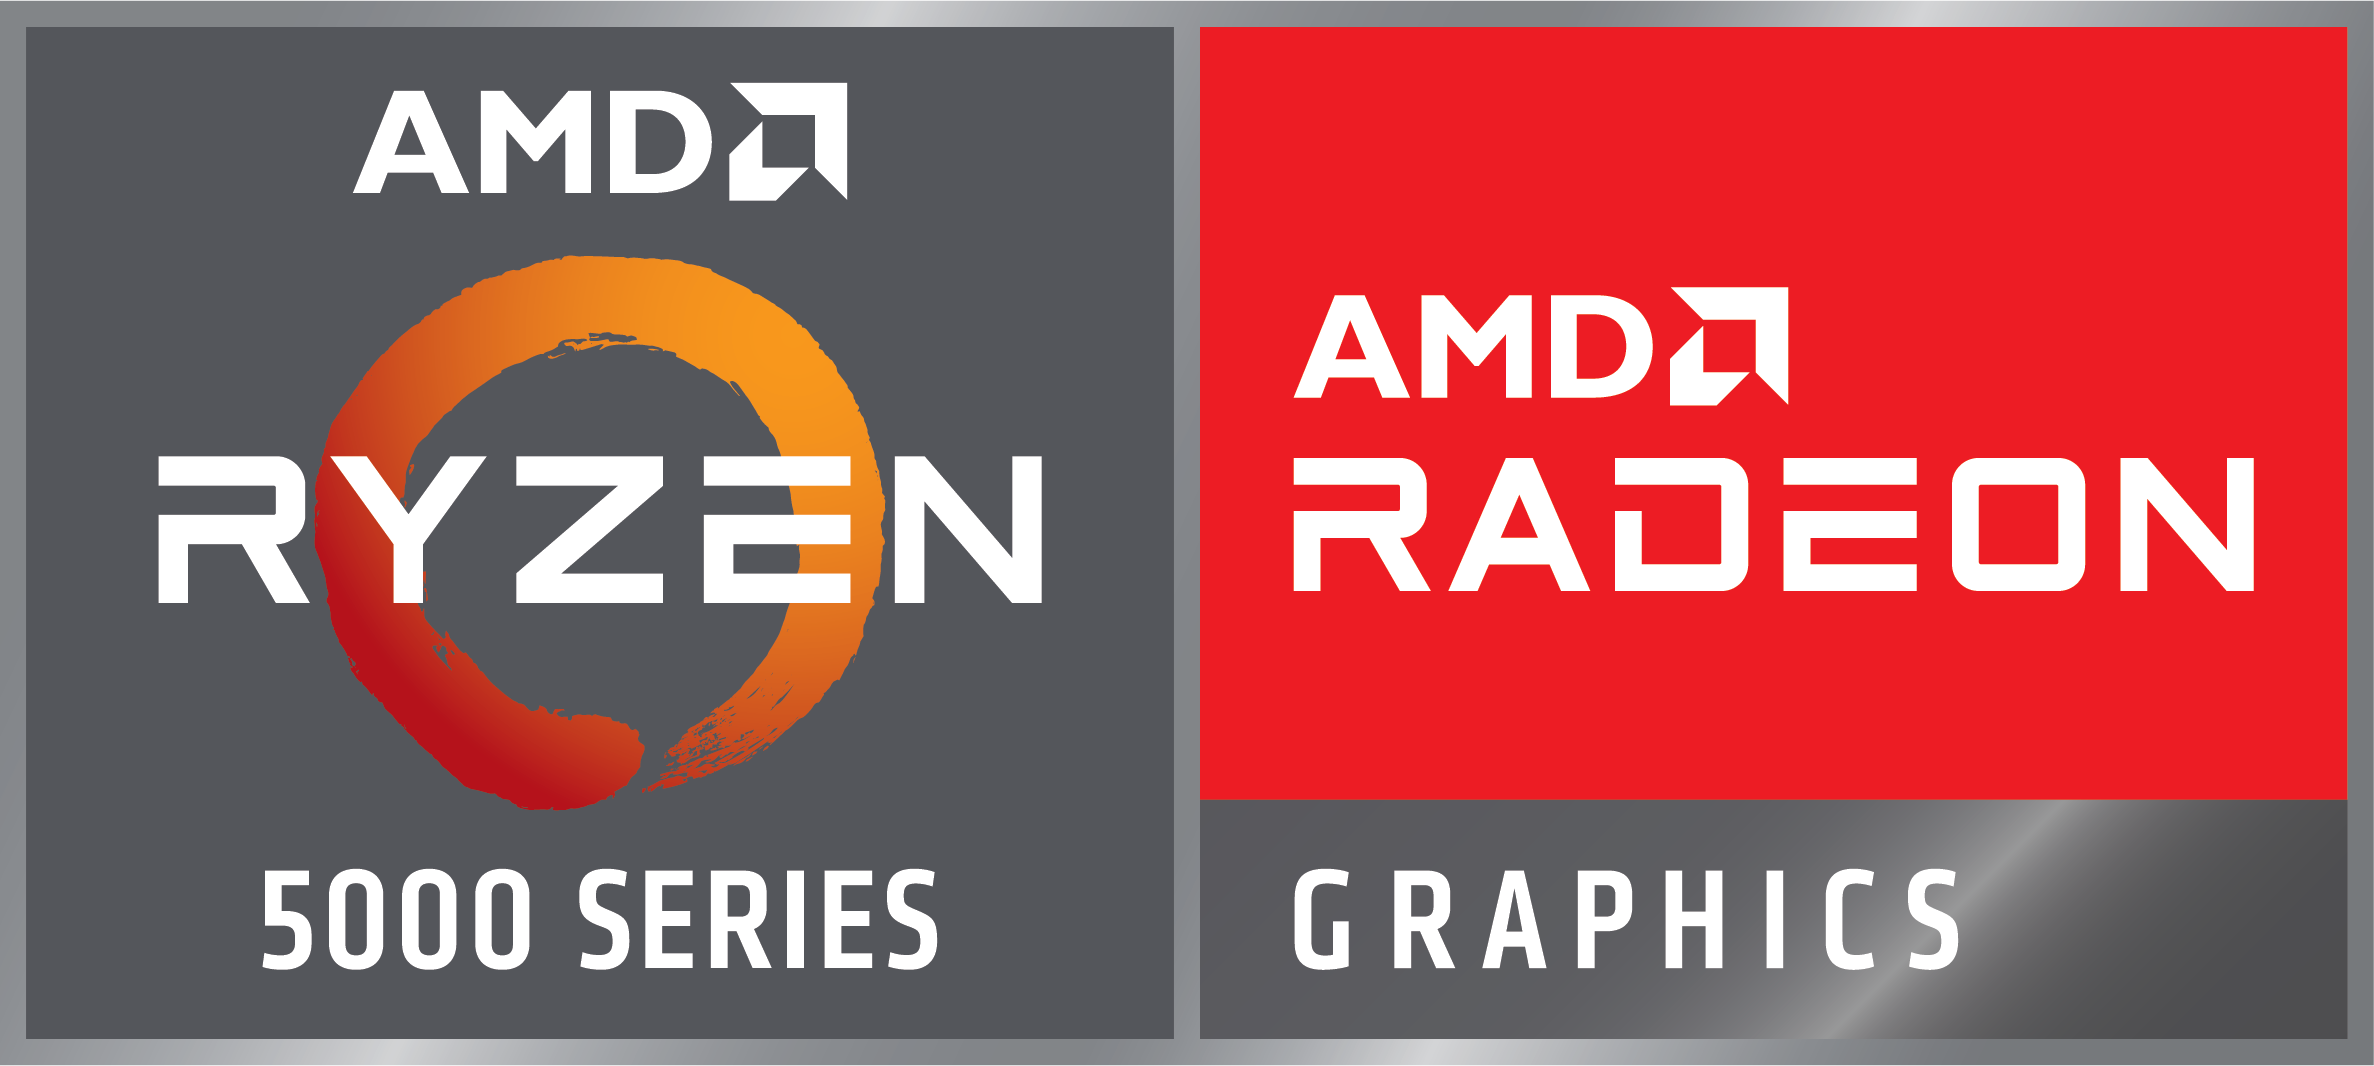 AMD_RADEON_Banner